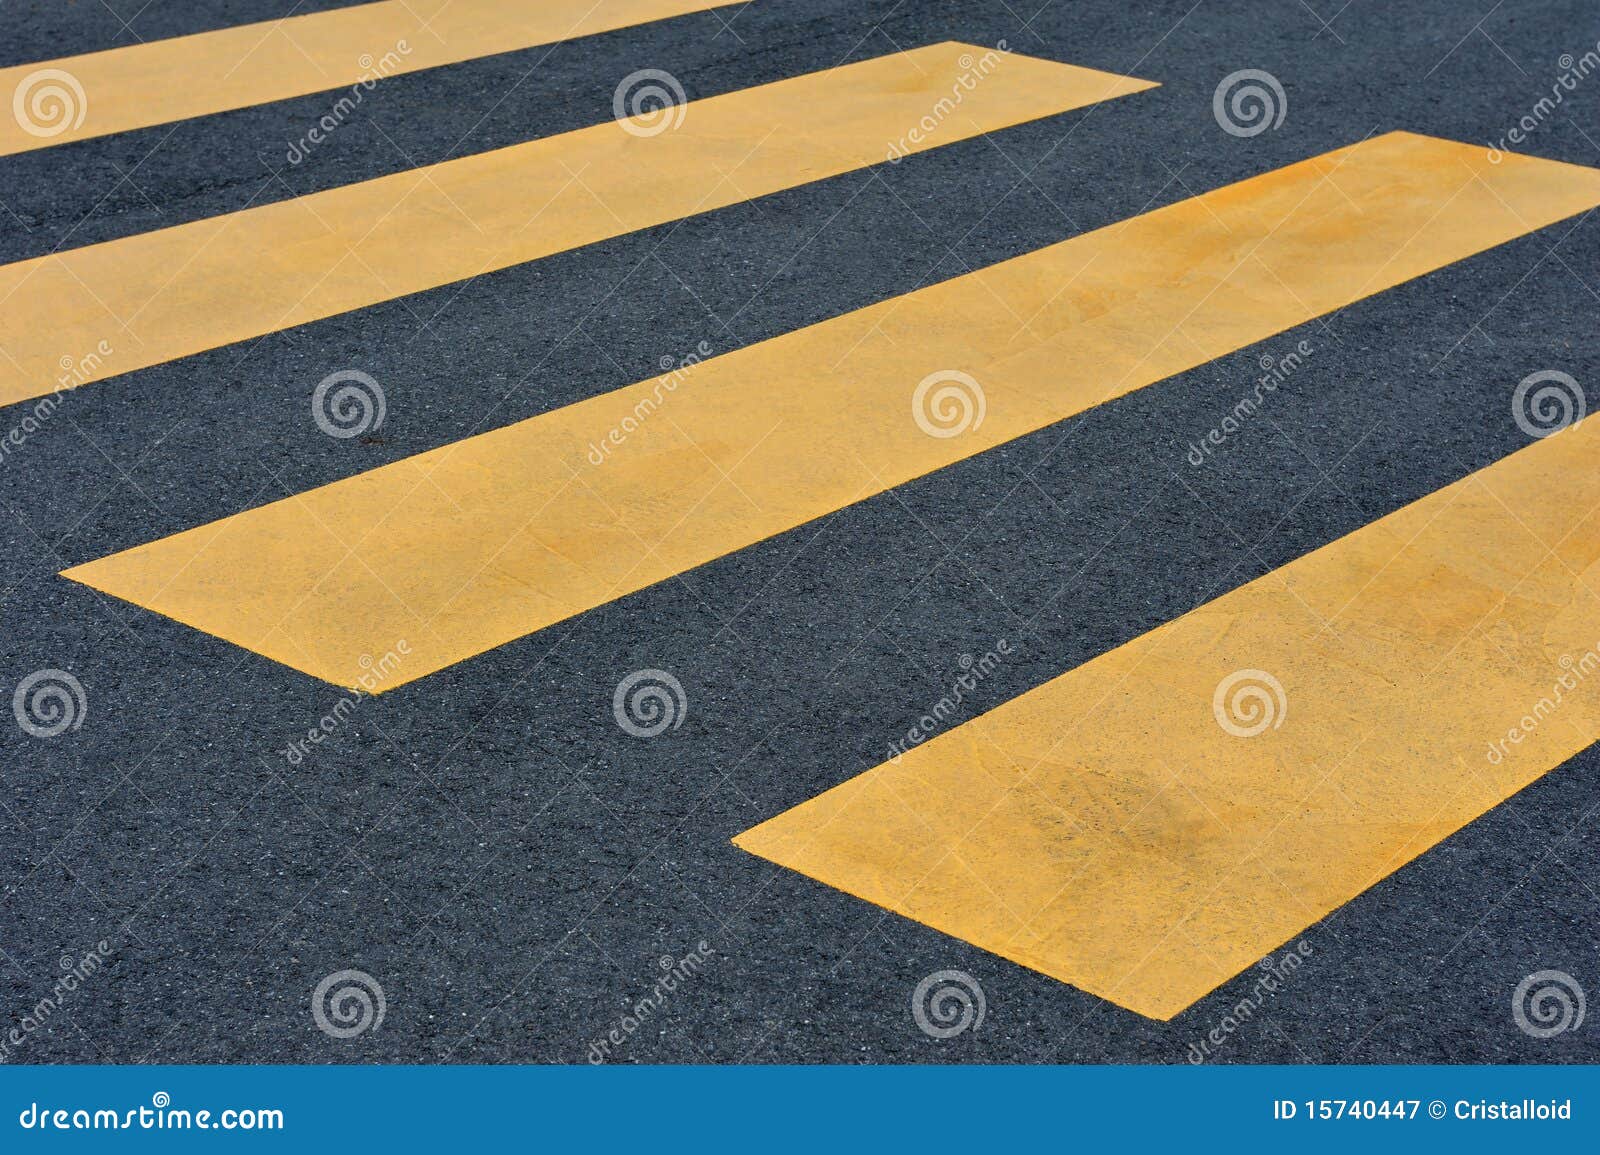 yellow pedestrian crossing on black pavement